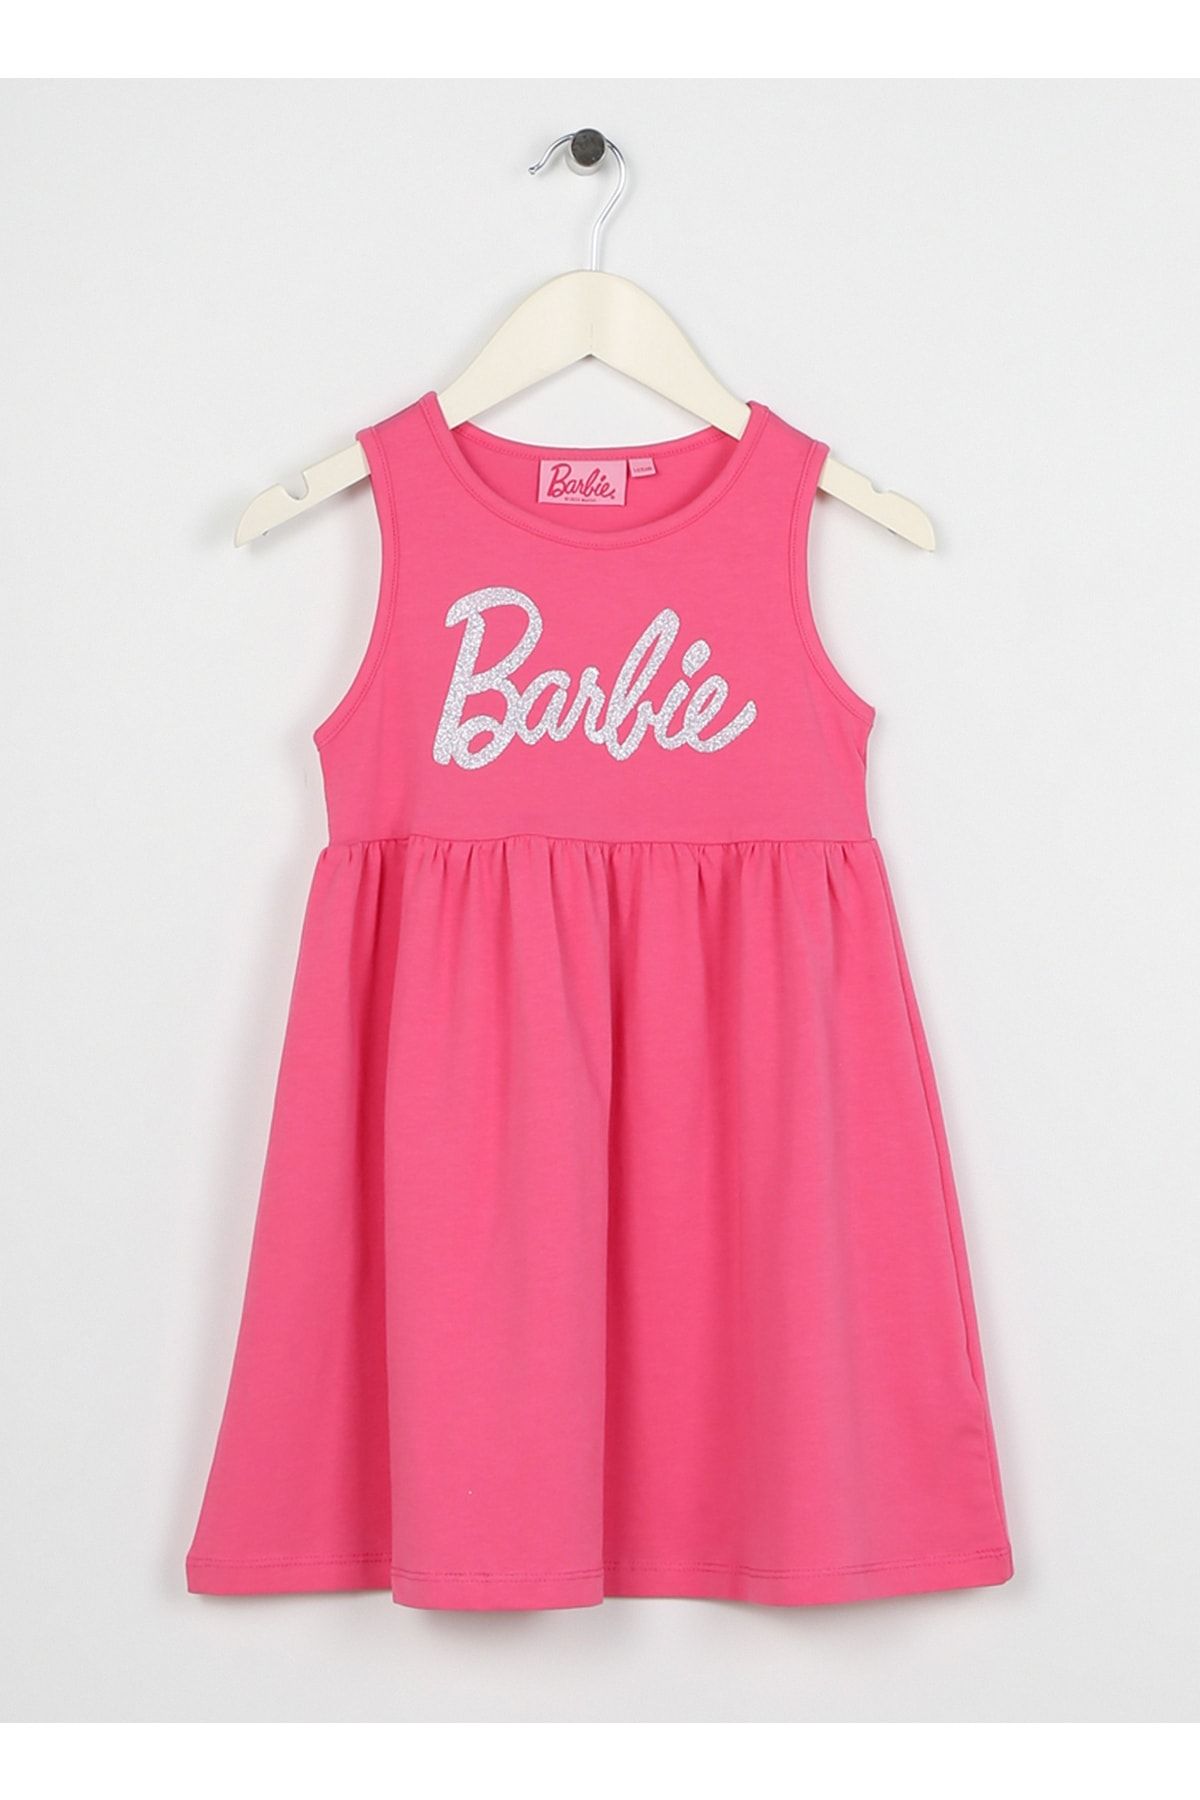 Barbie Elbise, 11-12 Yaş, Fuşya